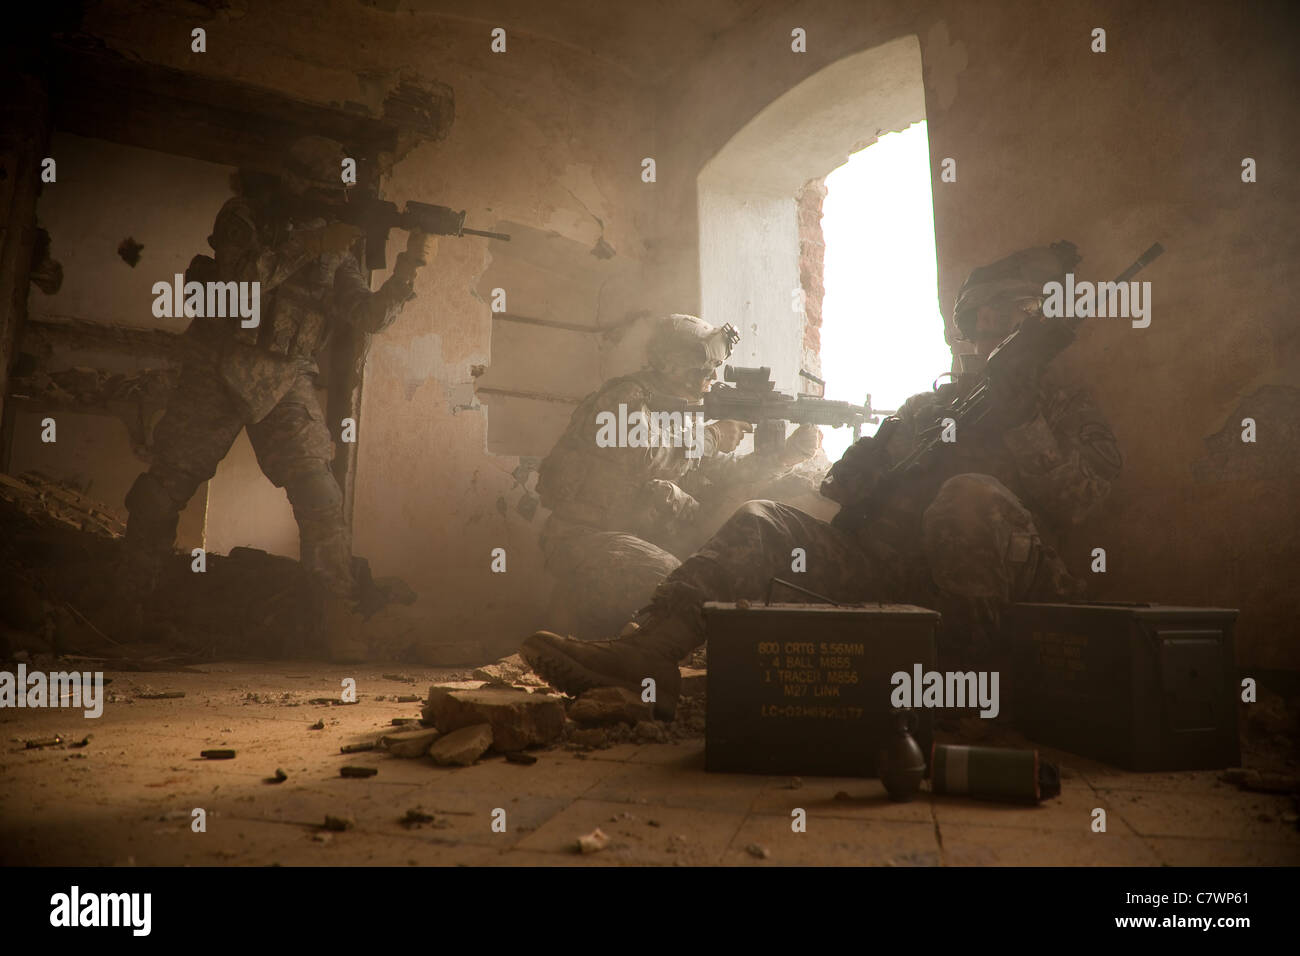 US Army Rangers in Afghanistan bekämpfen Szene. Stockfoto